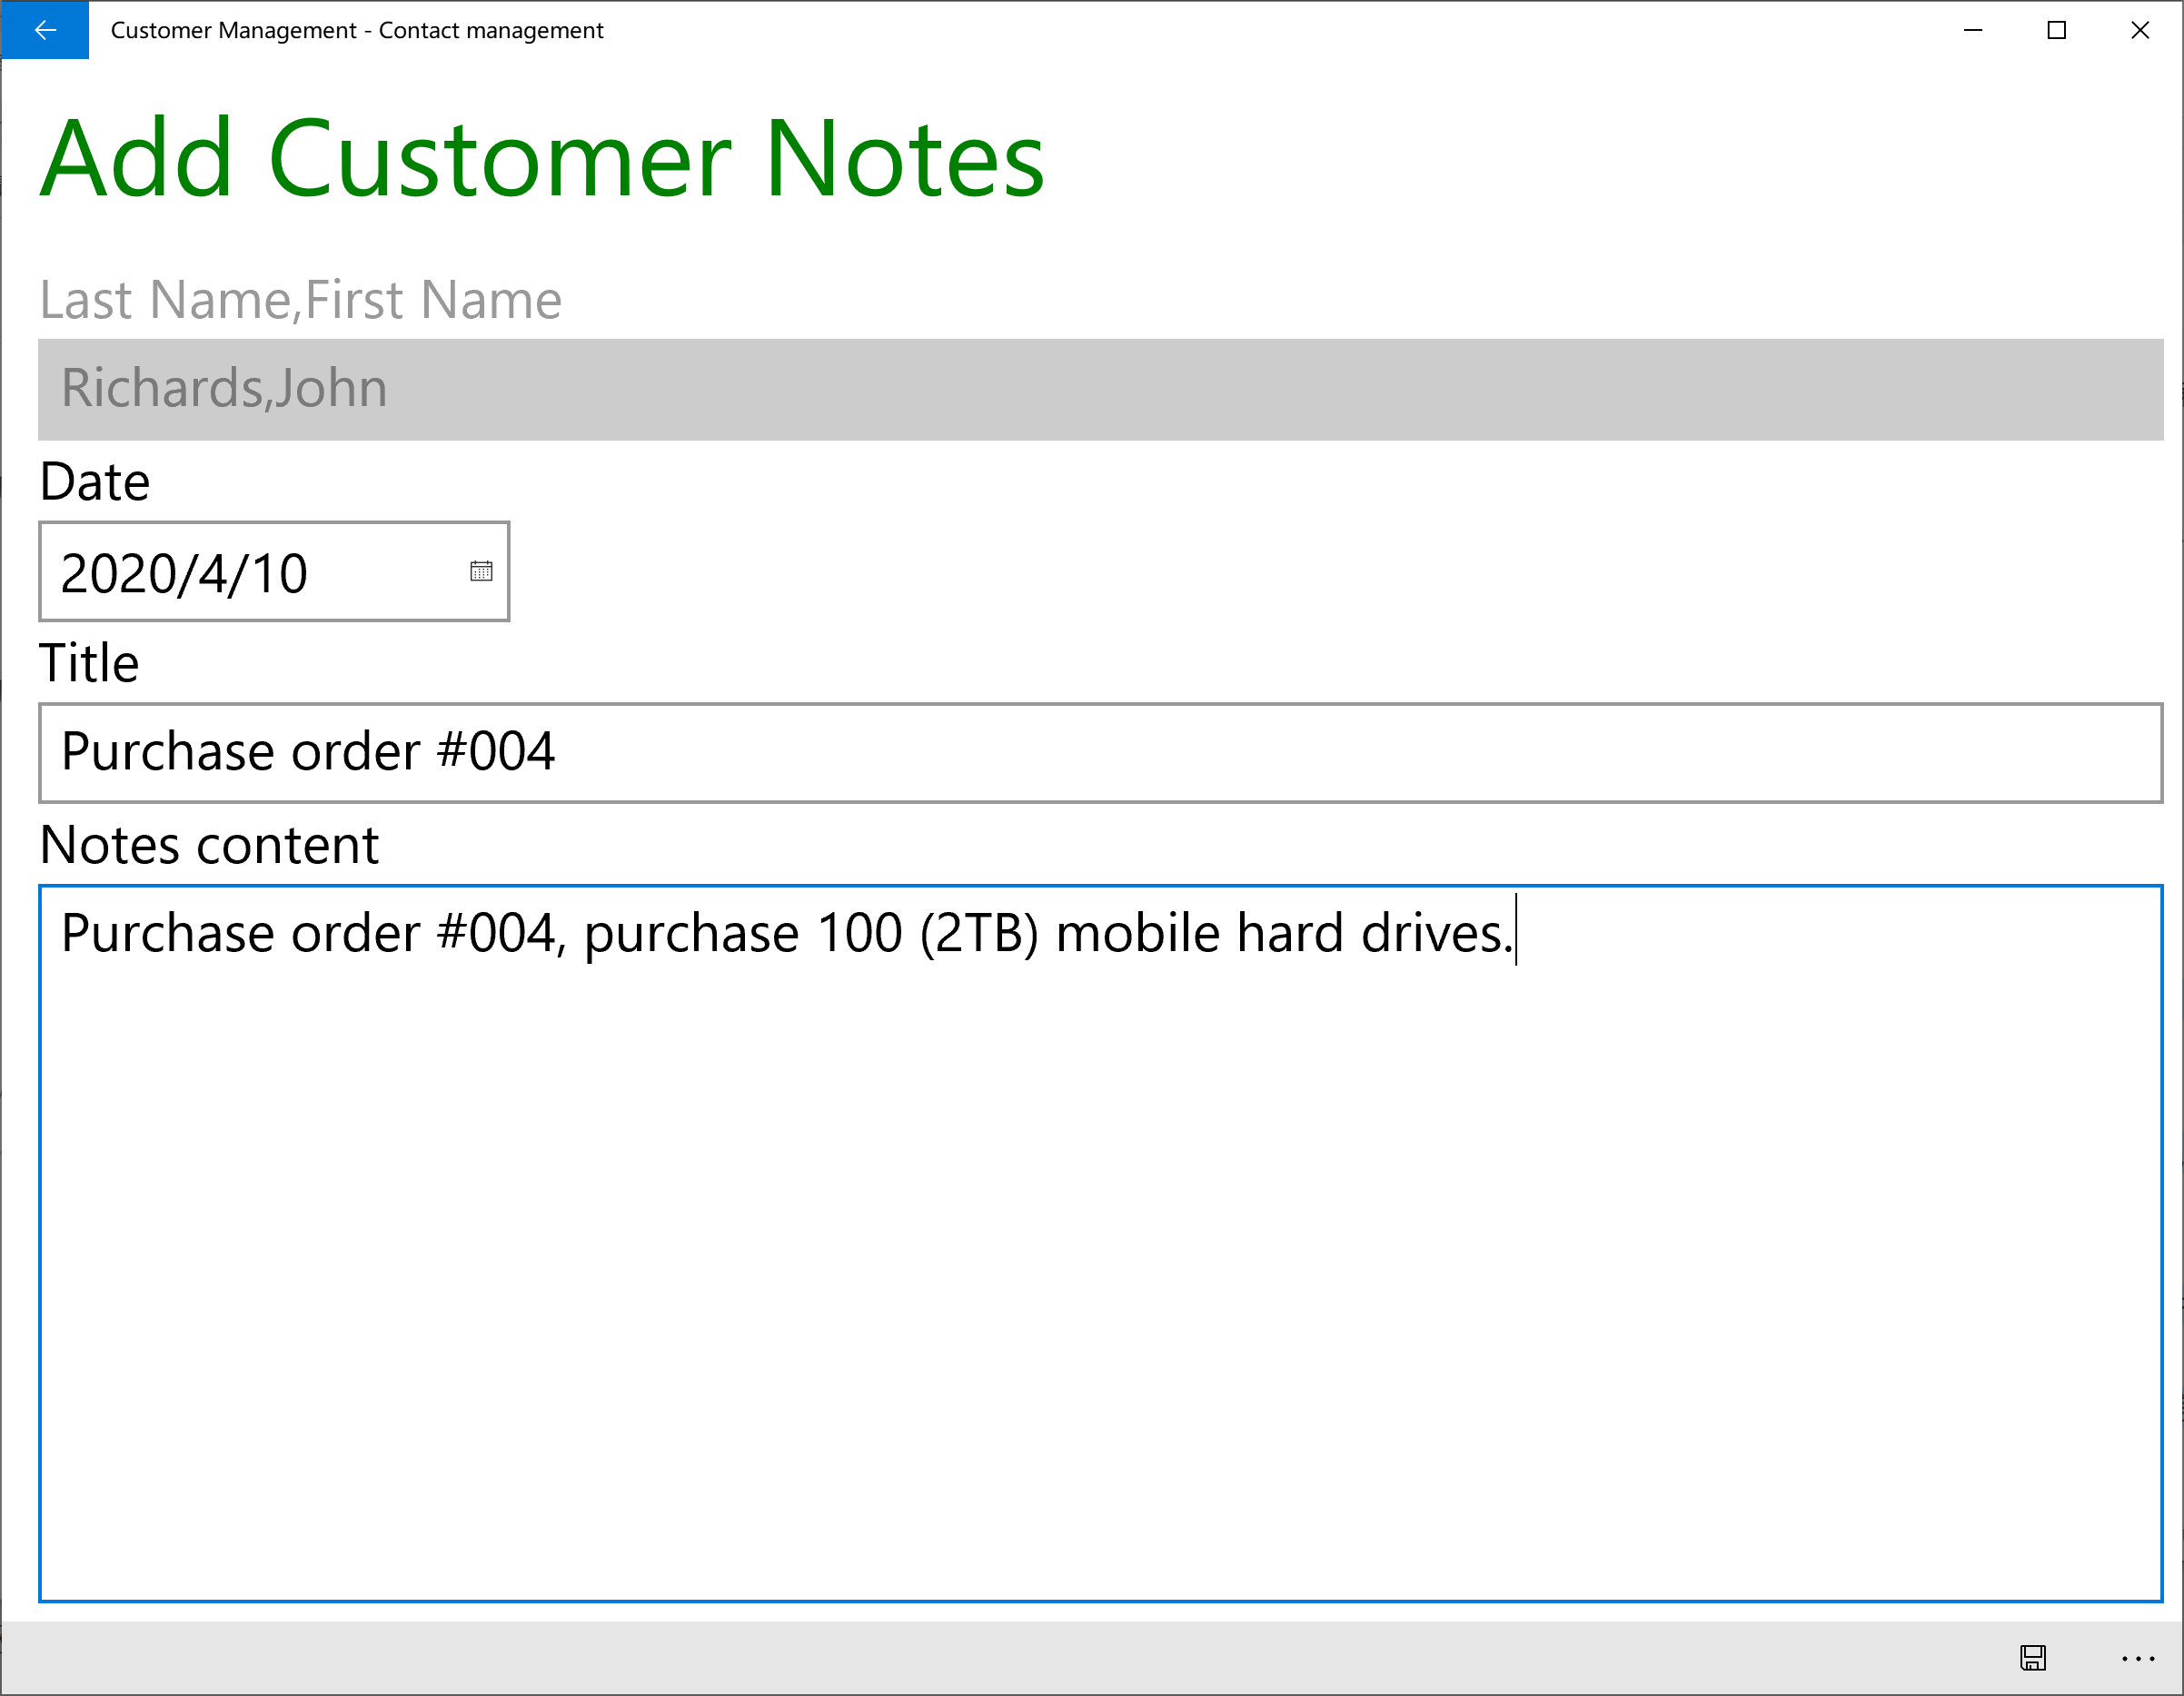 Customer Management - Customer Contact Notes